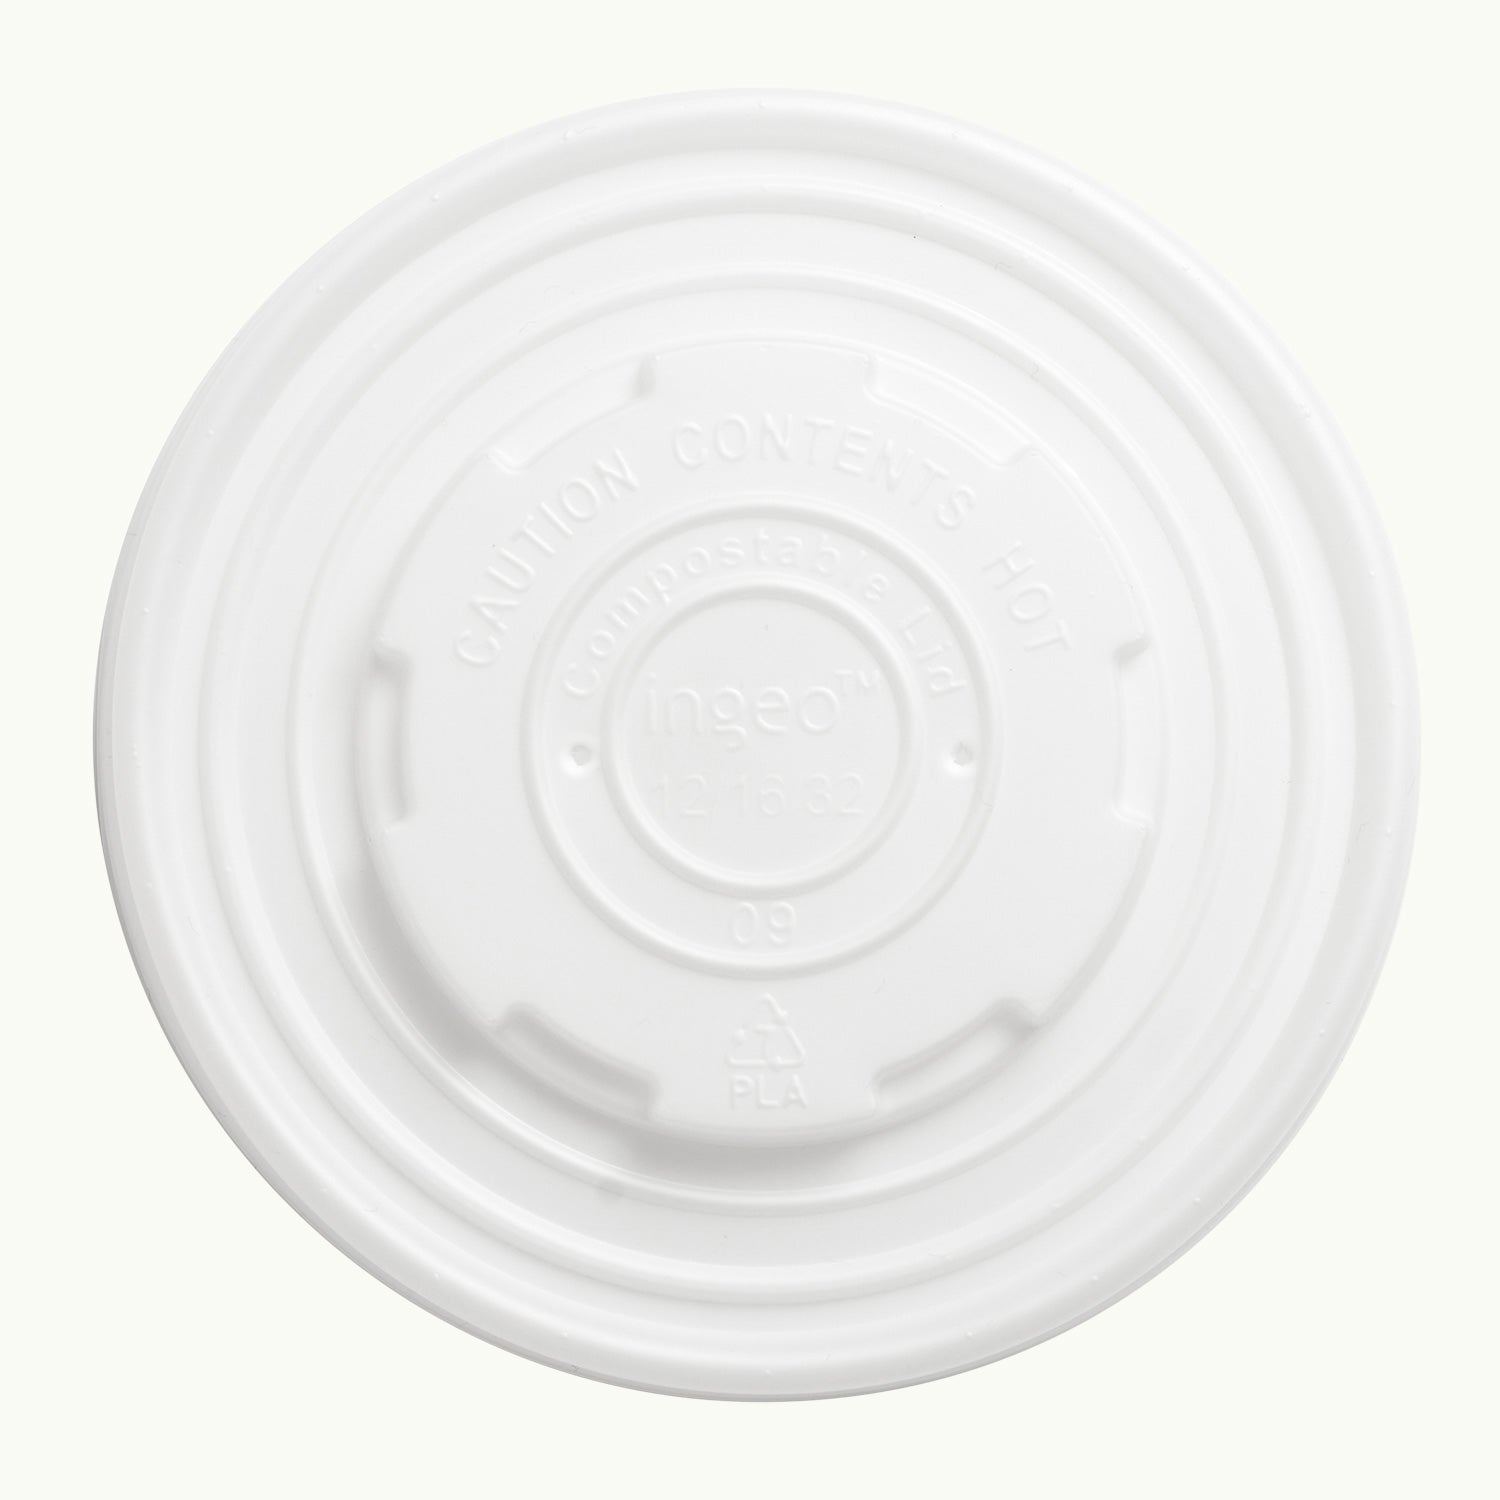 Ecoware Ingeo™ bioplastic lid for EcoBowl range, 115 mm.